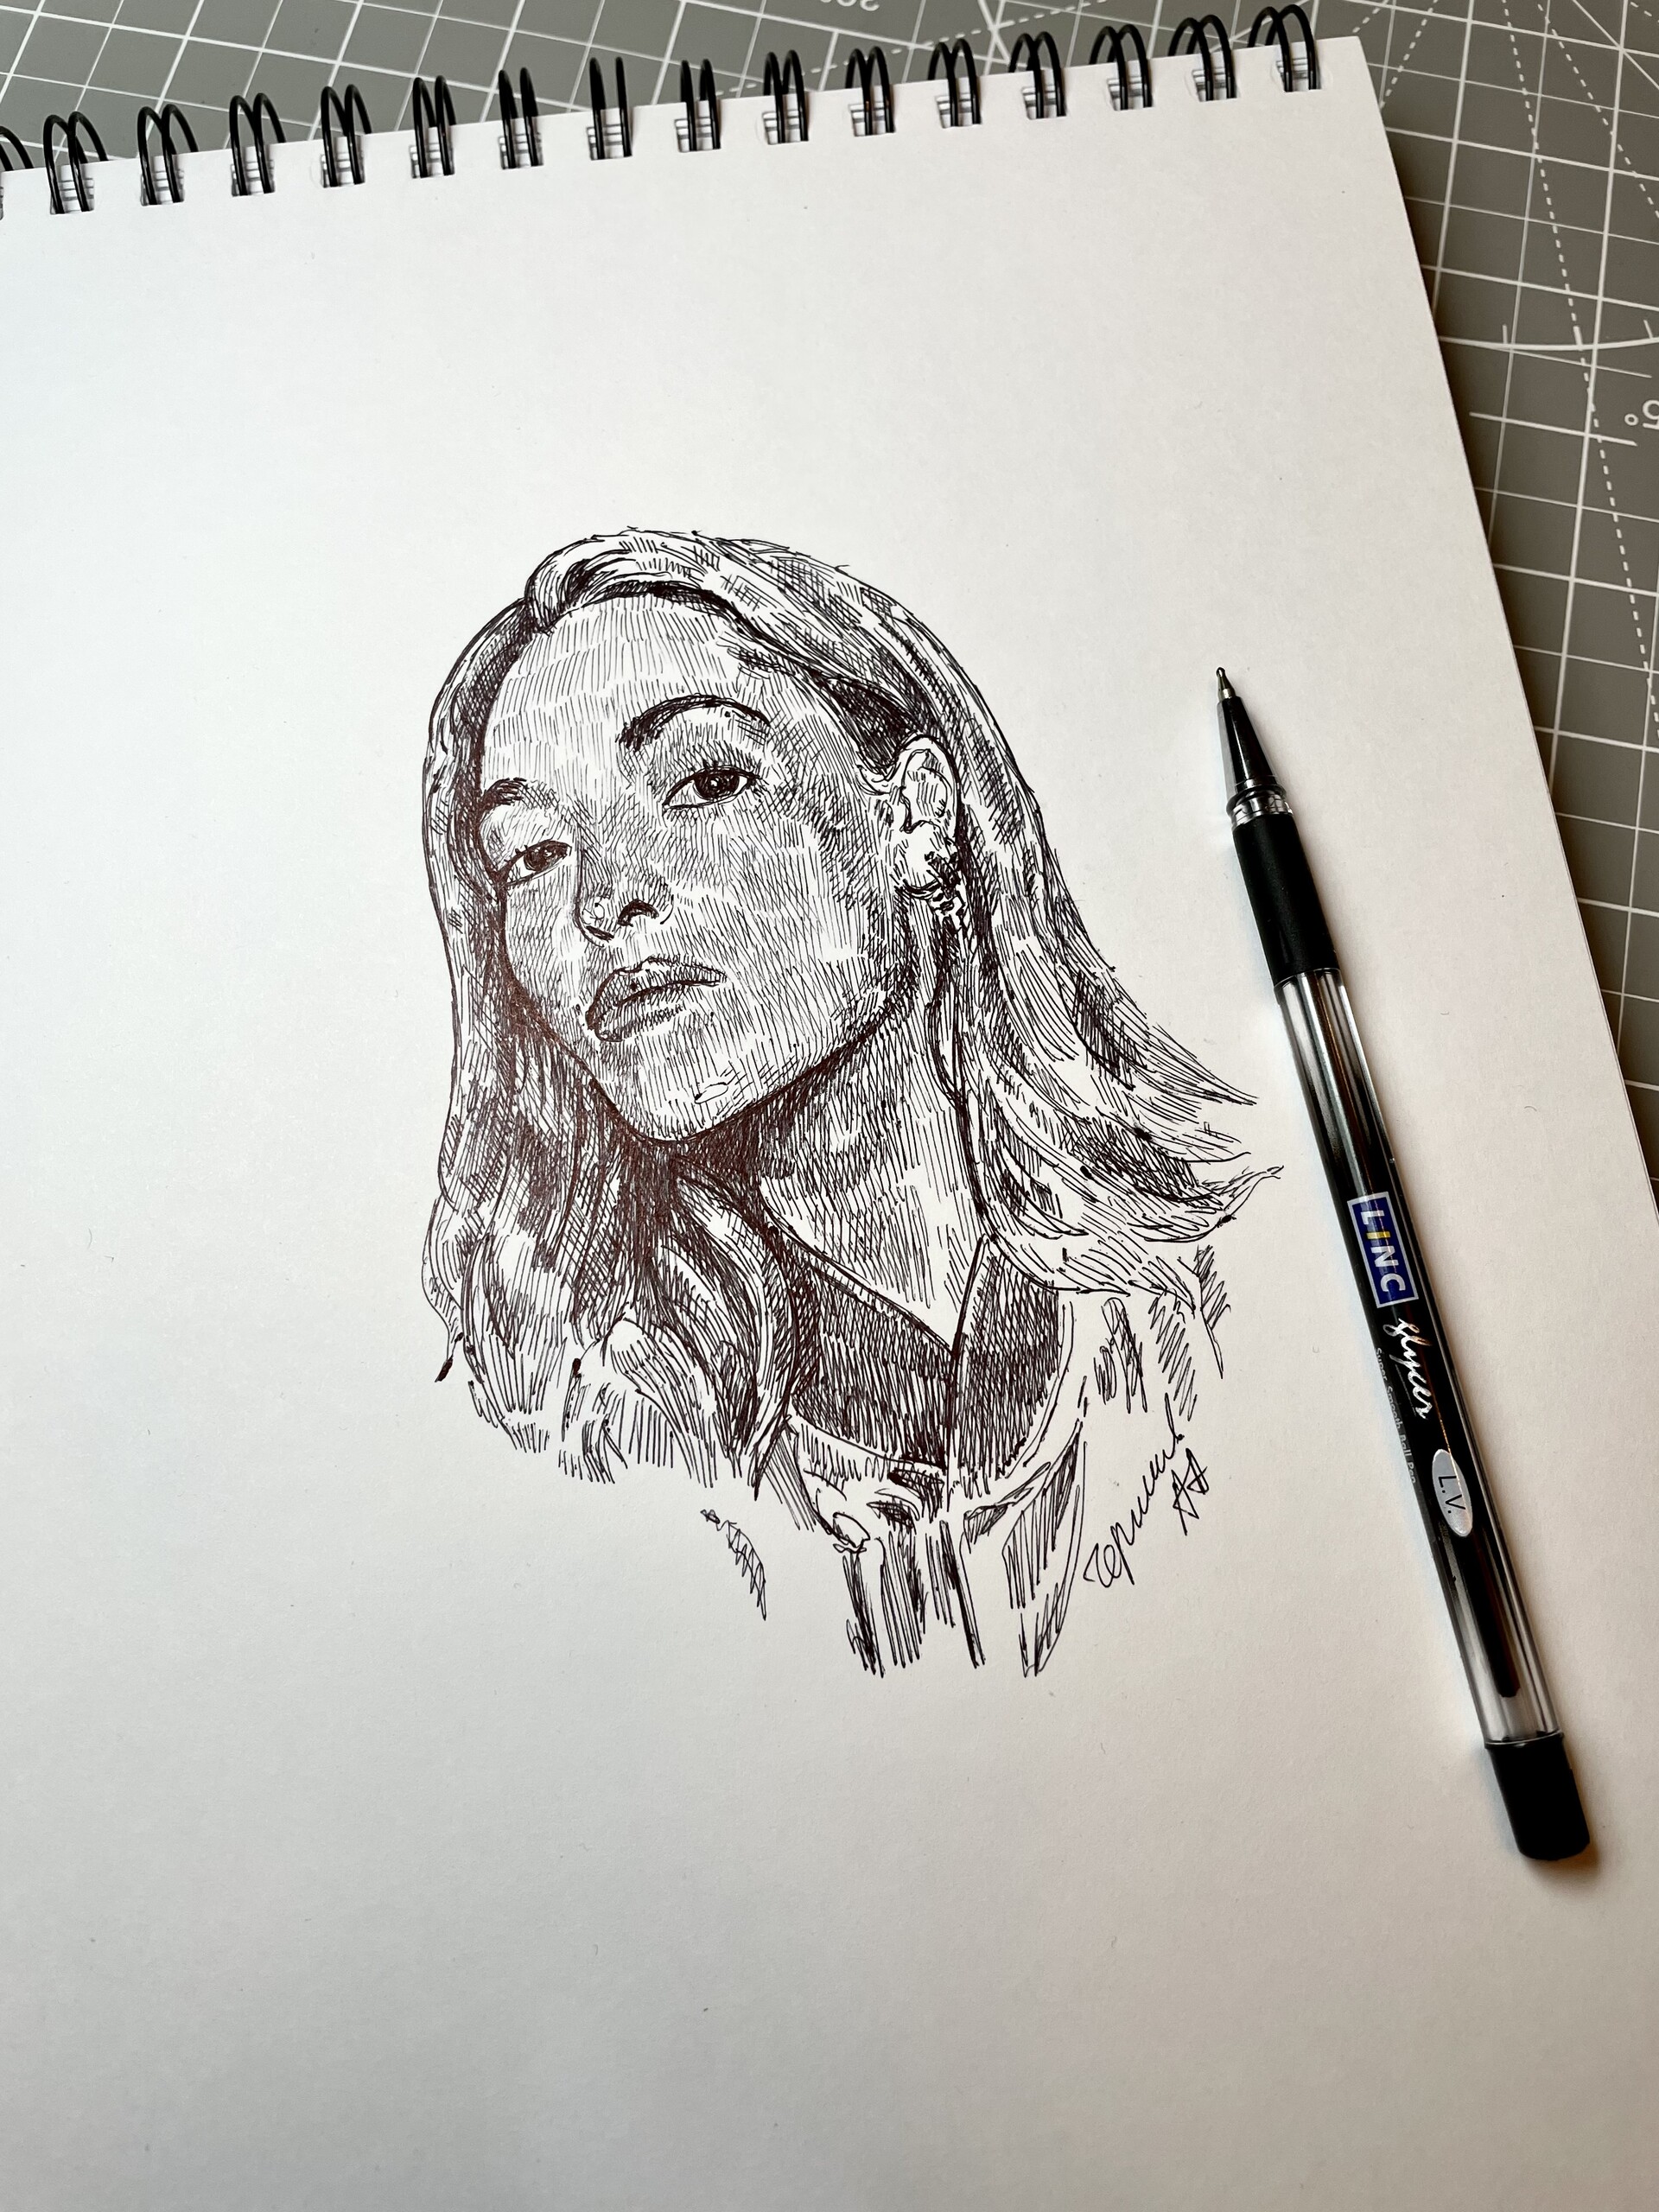 ArtStation - Ballpoint pen art drawing